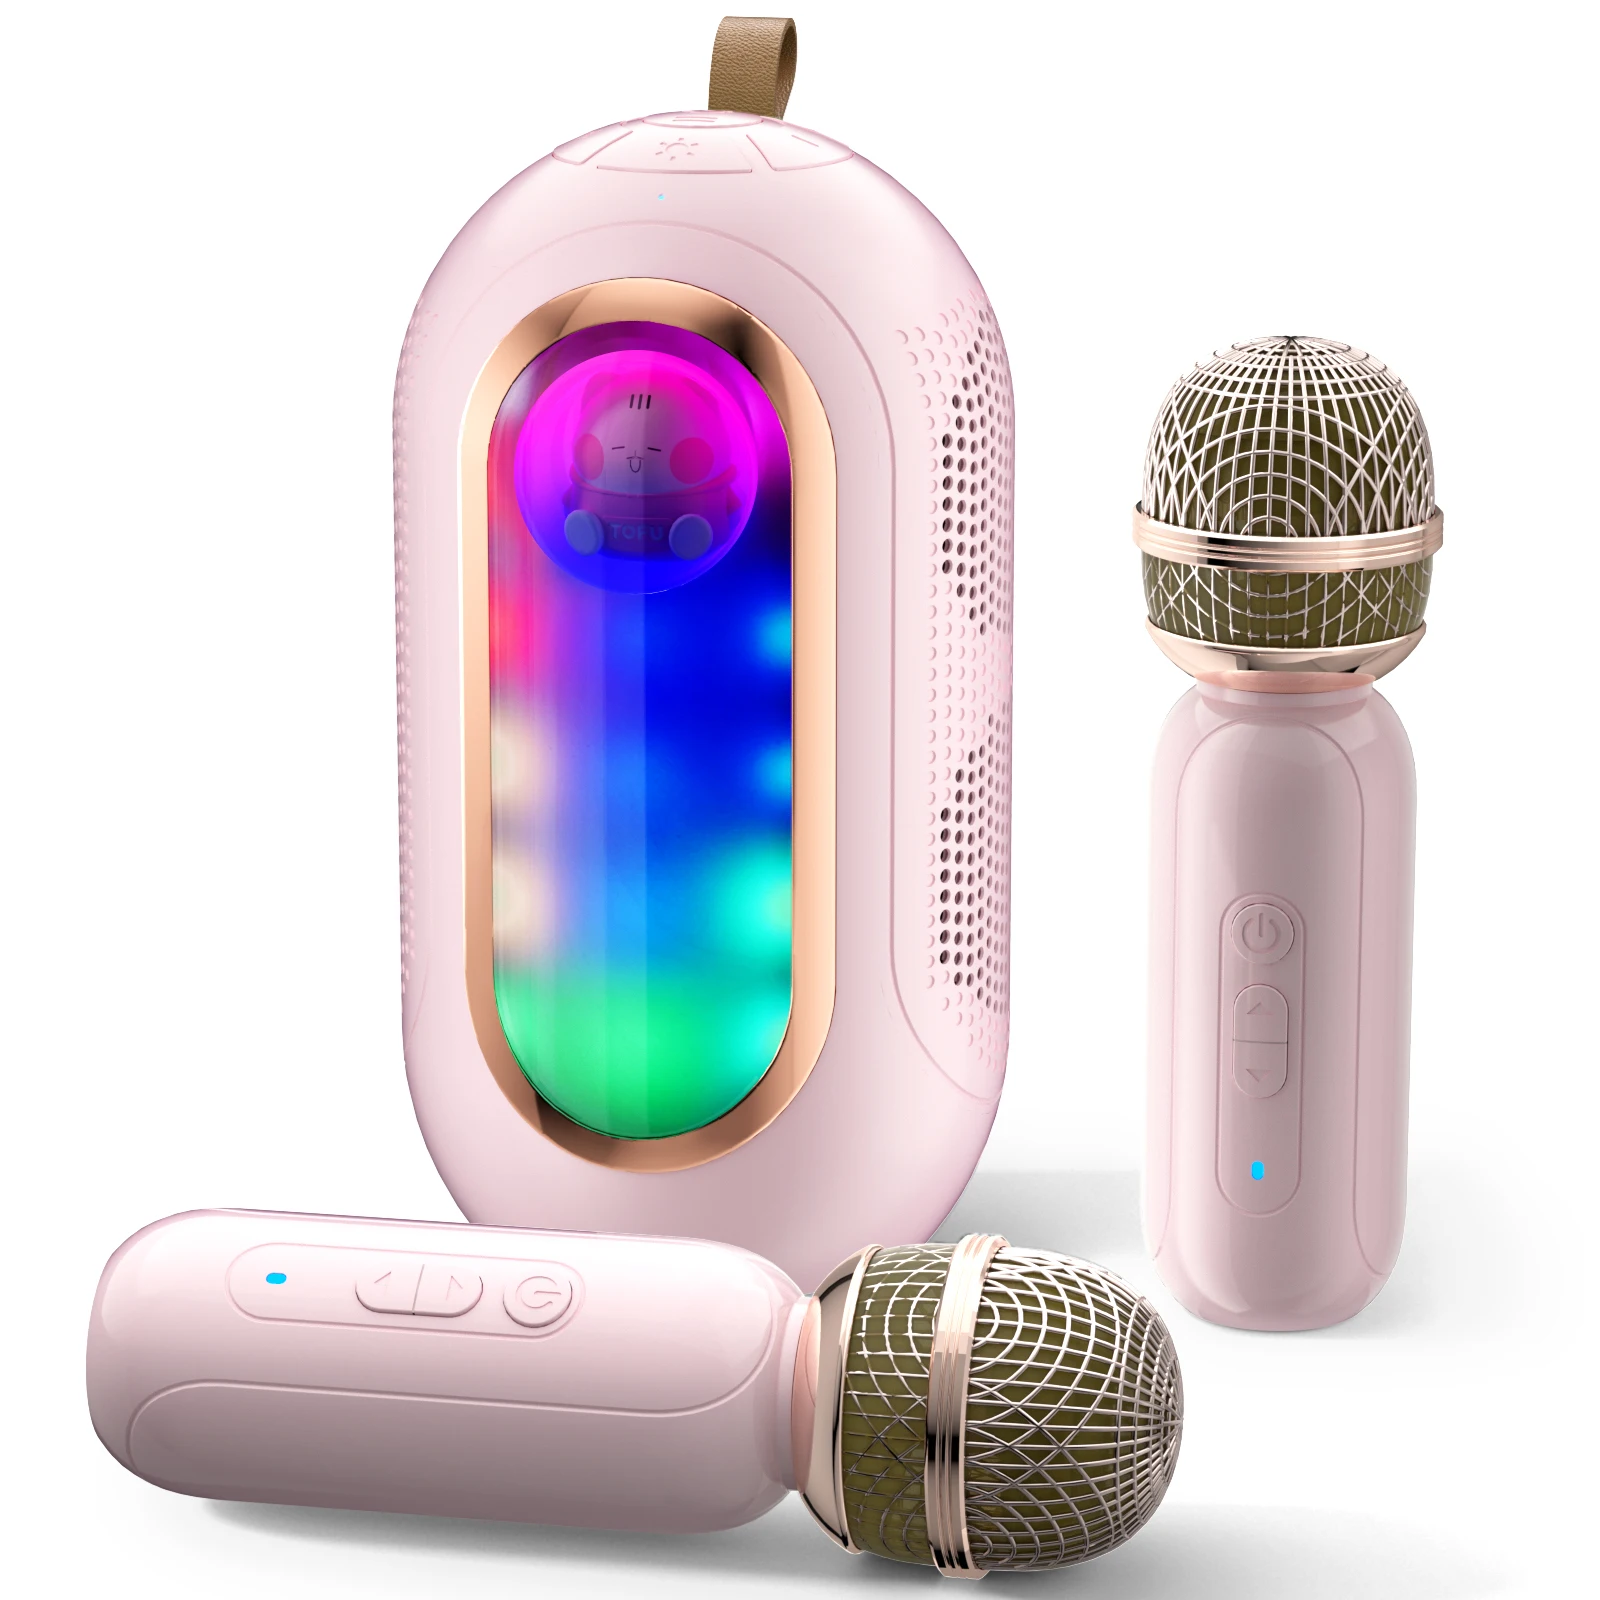 ICARER FAMILY High Quality Portable Wireless Speaker Rechargeable Waterproof Stereo Karaoke Speaker